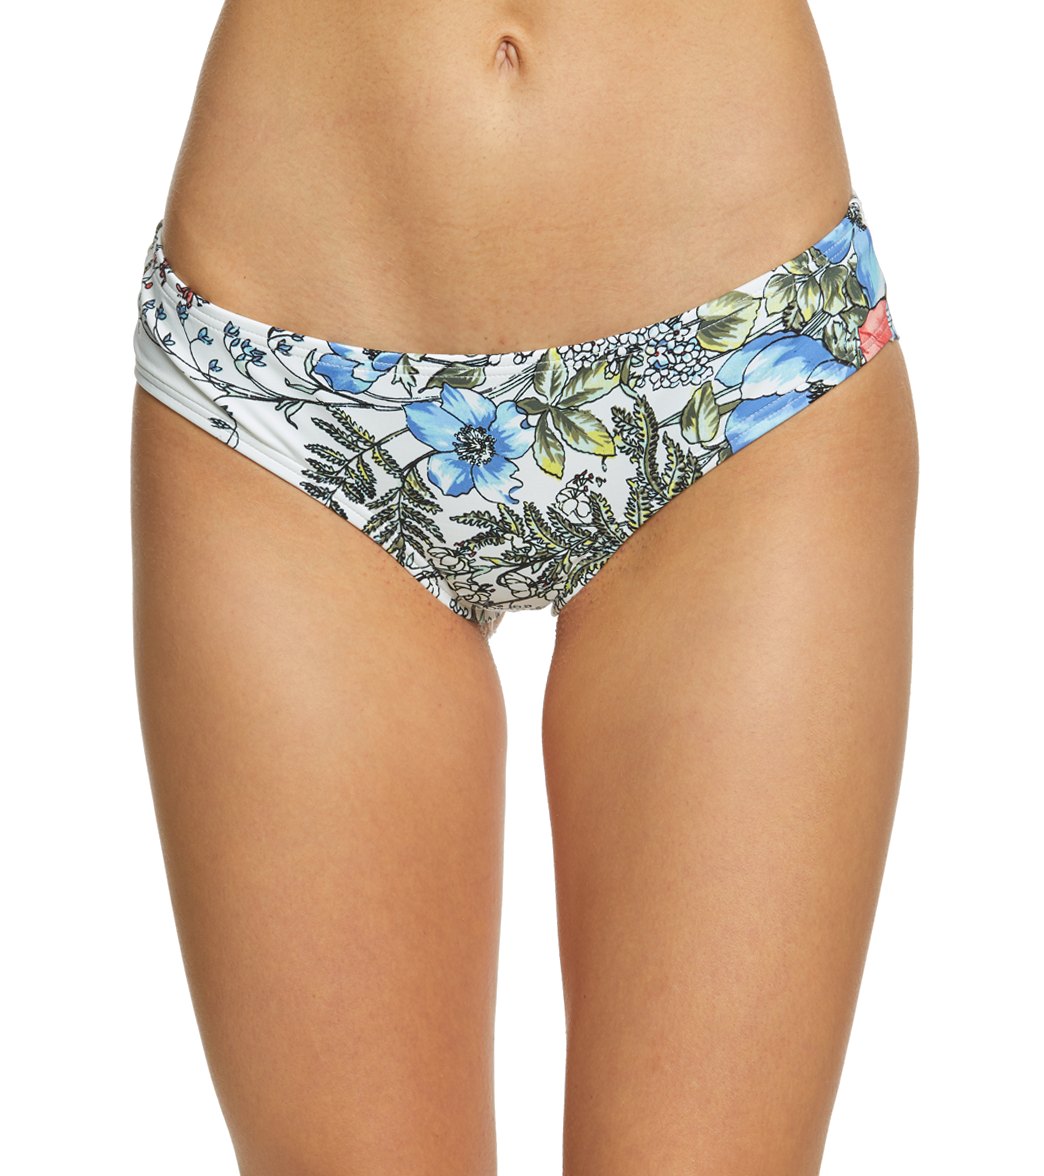 Vince Camuto Wildflower Cheeky Bikini Bottom - White Multi Large - Swimoutlet.com